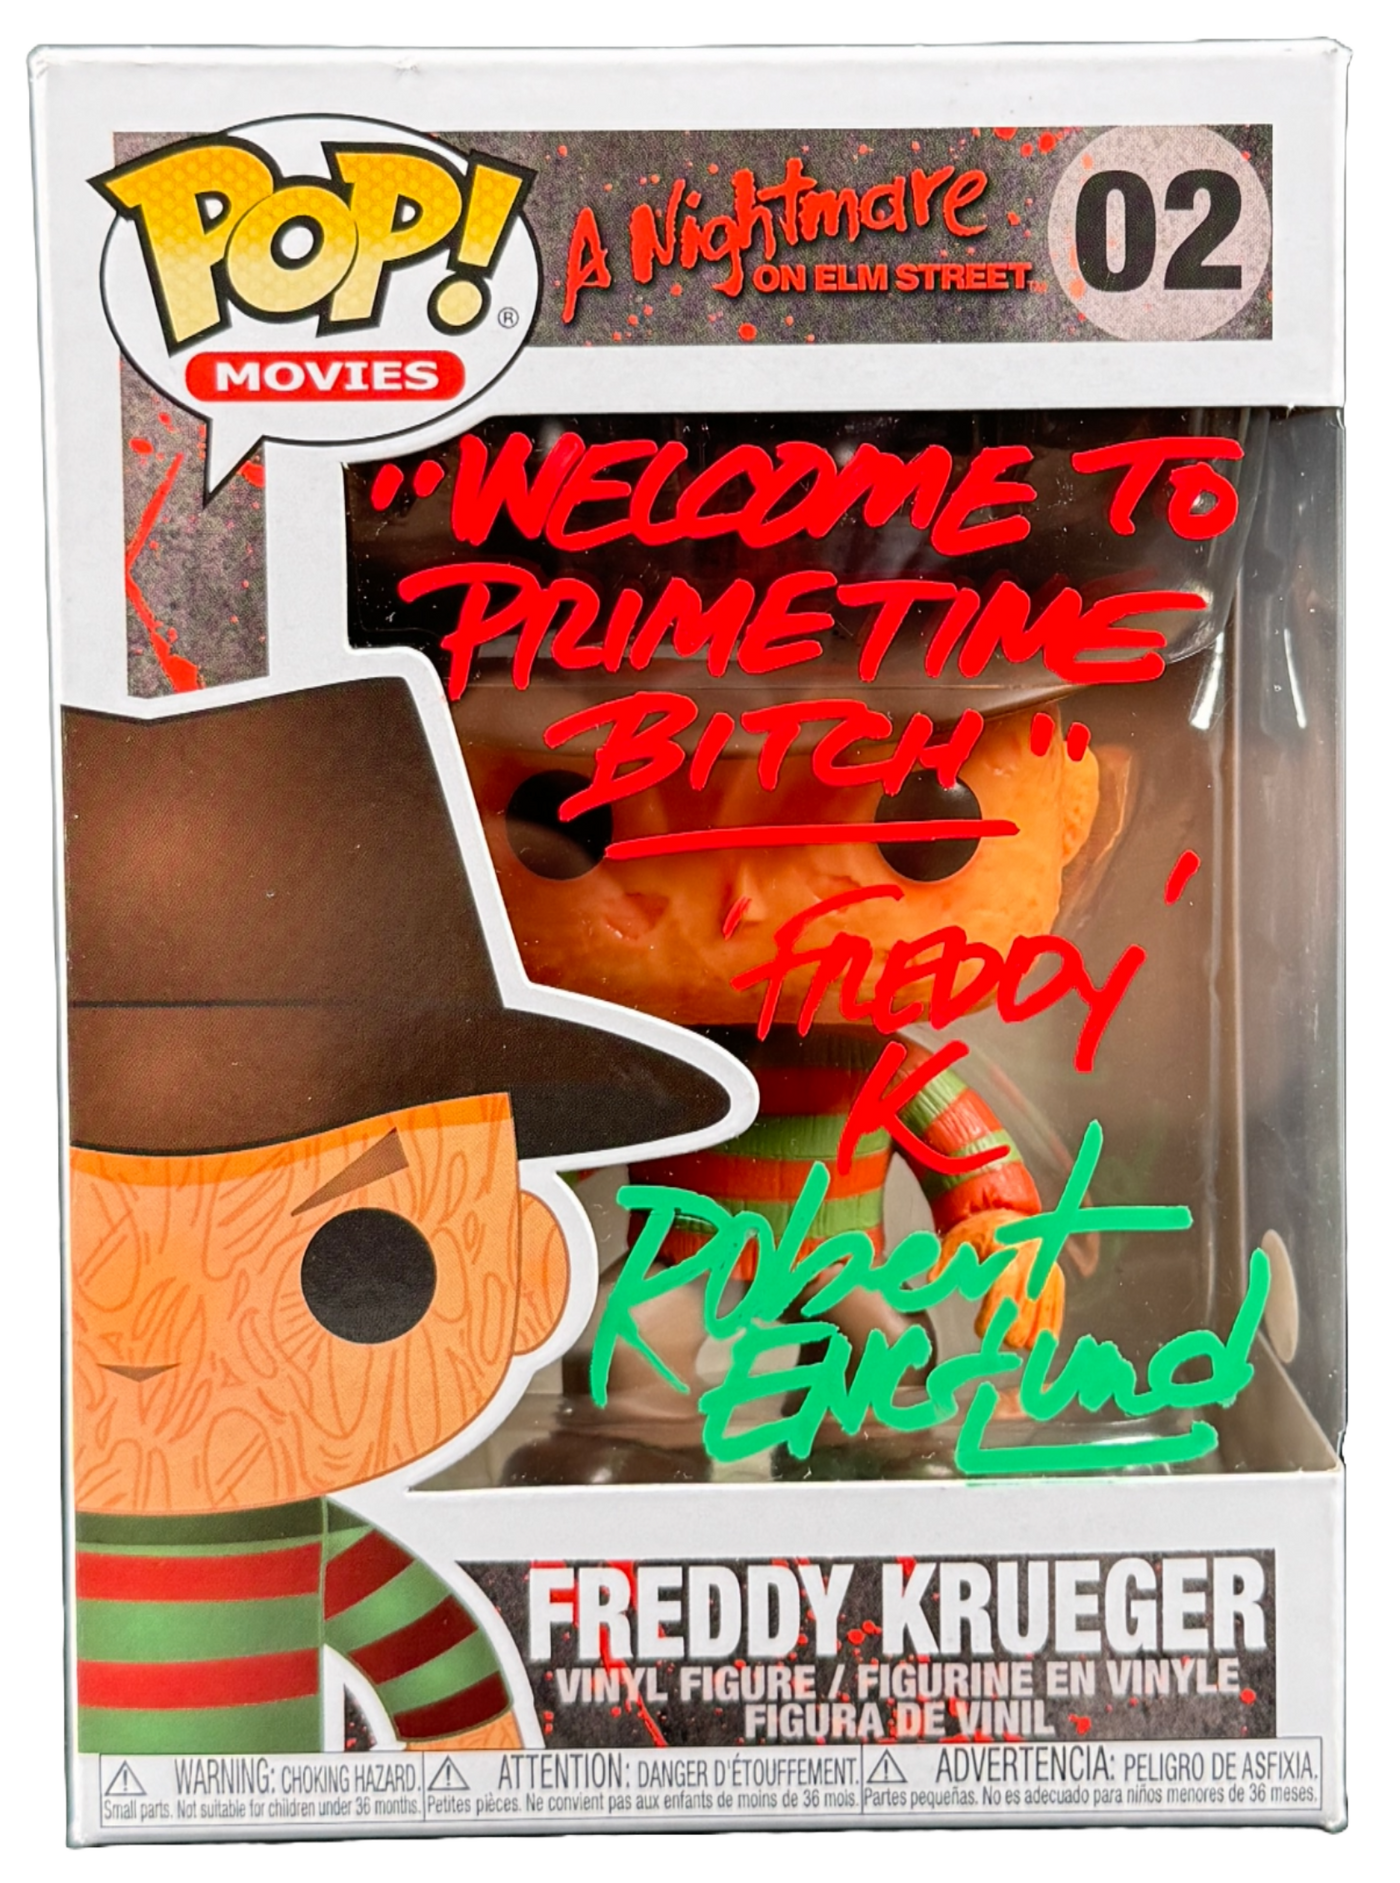 Robert Englund "Freddy Krueger" Signed Funko Pop #02 A Nightmare on Elm Street Autographed JSA COA 2